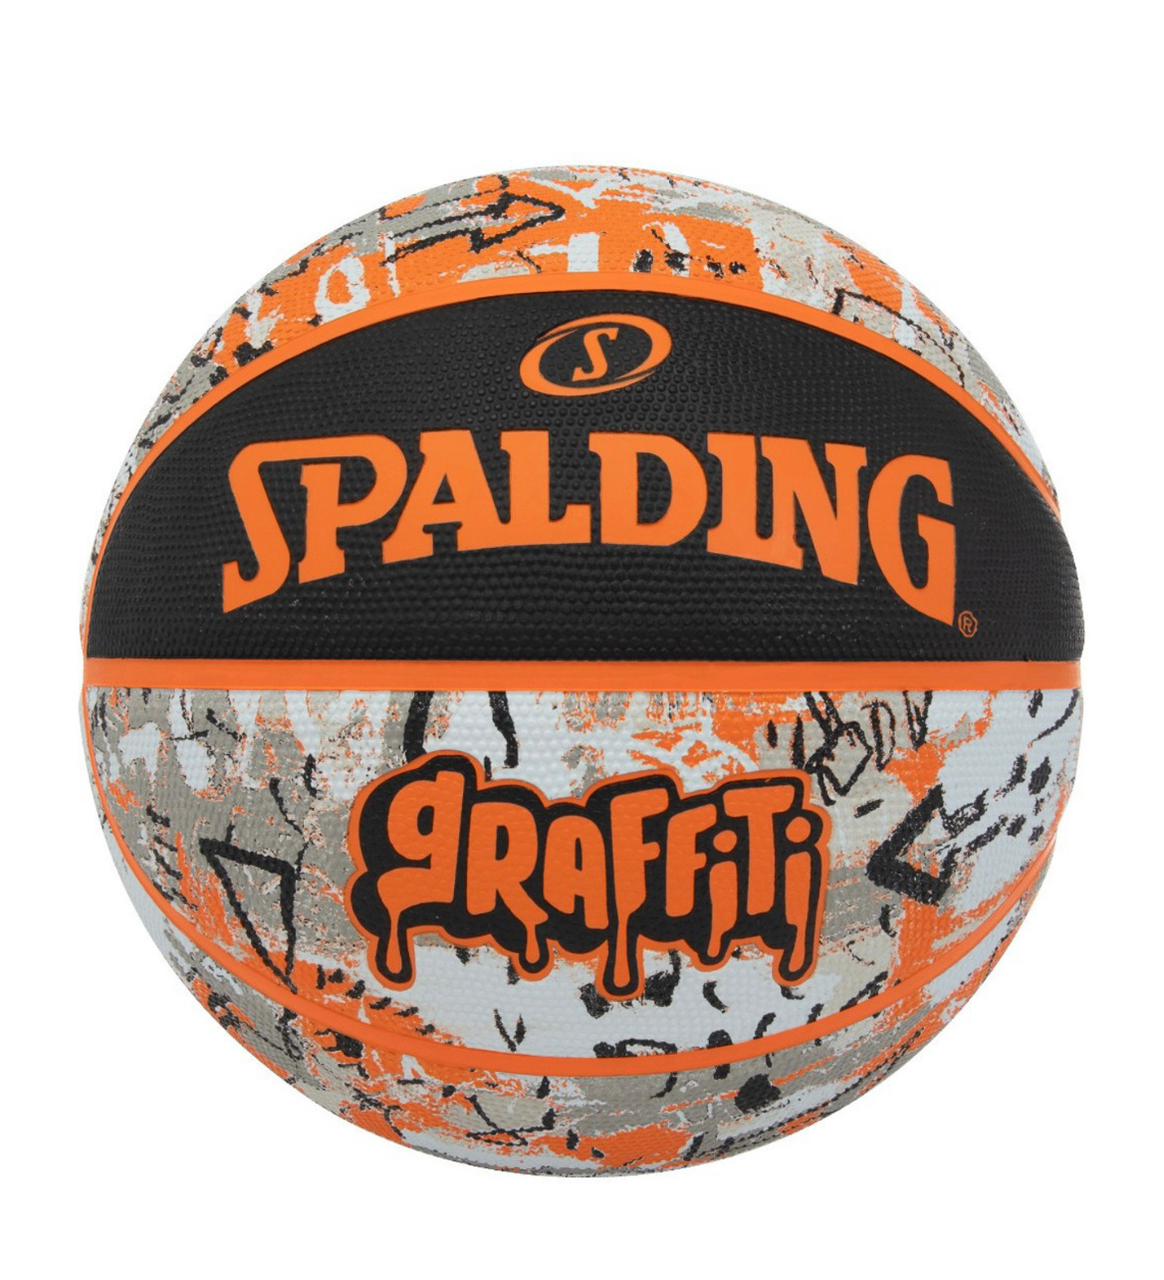 Spalding Graffiti Black/Orange Basketball